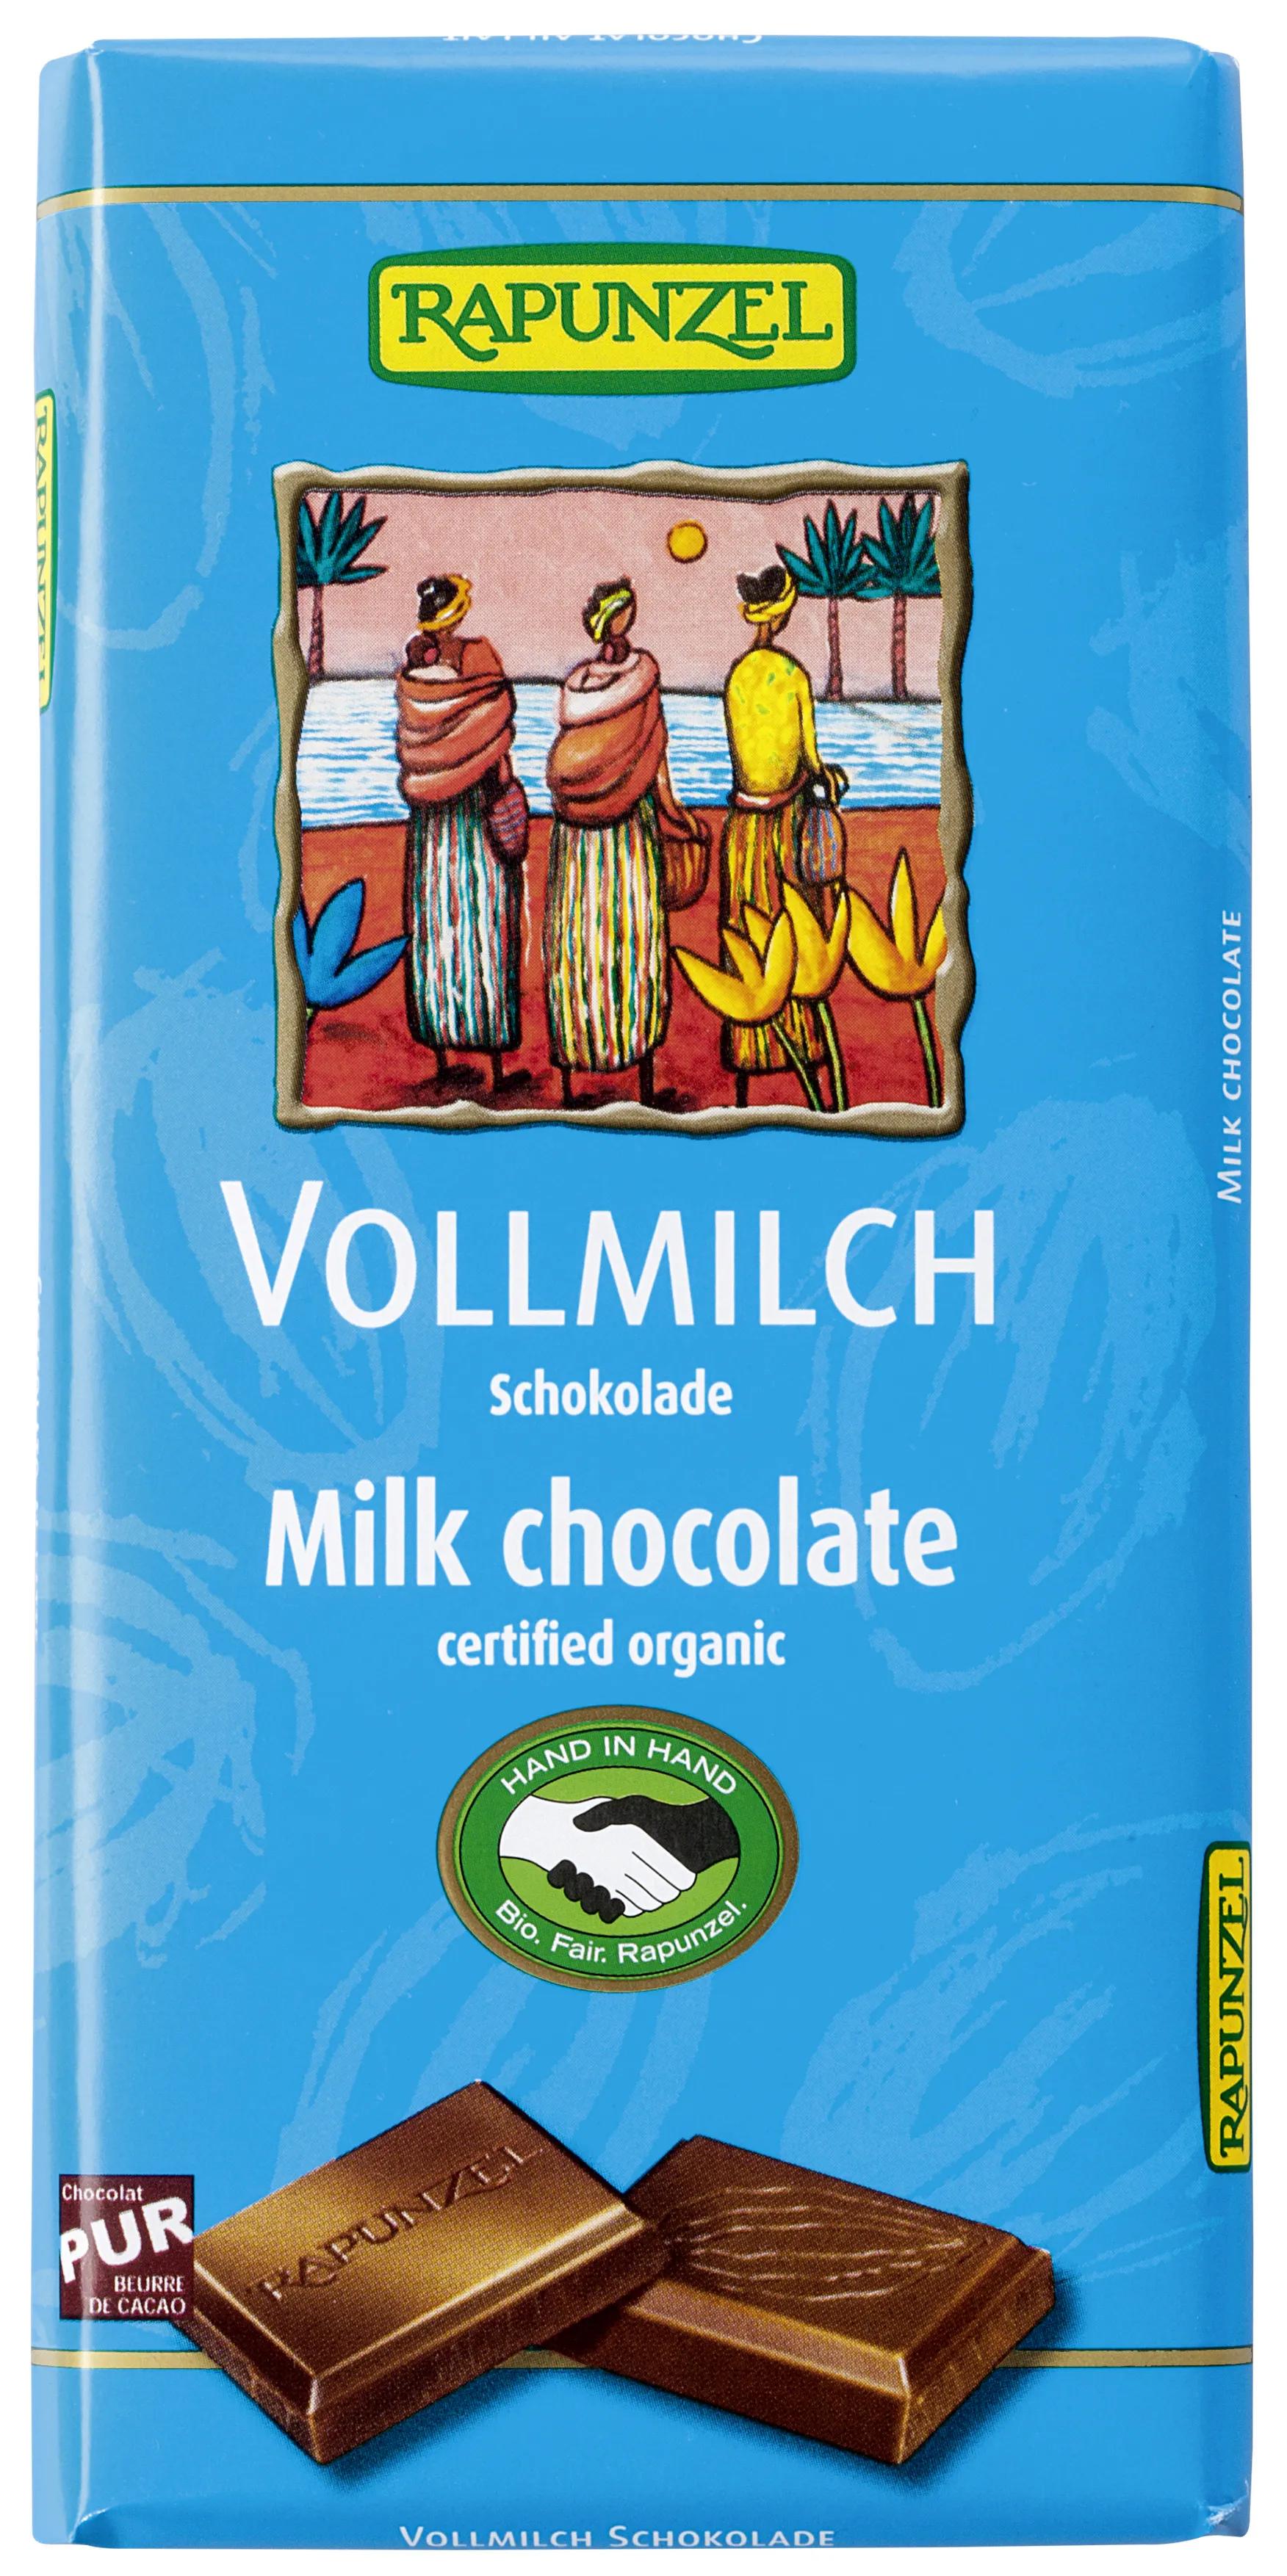 Vollmilch Schokolade | Vollmilch | Schokolade | Produkte | Rapunzel ...